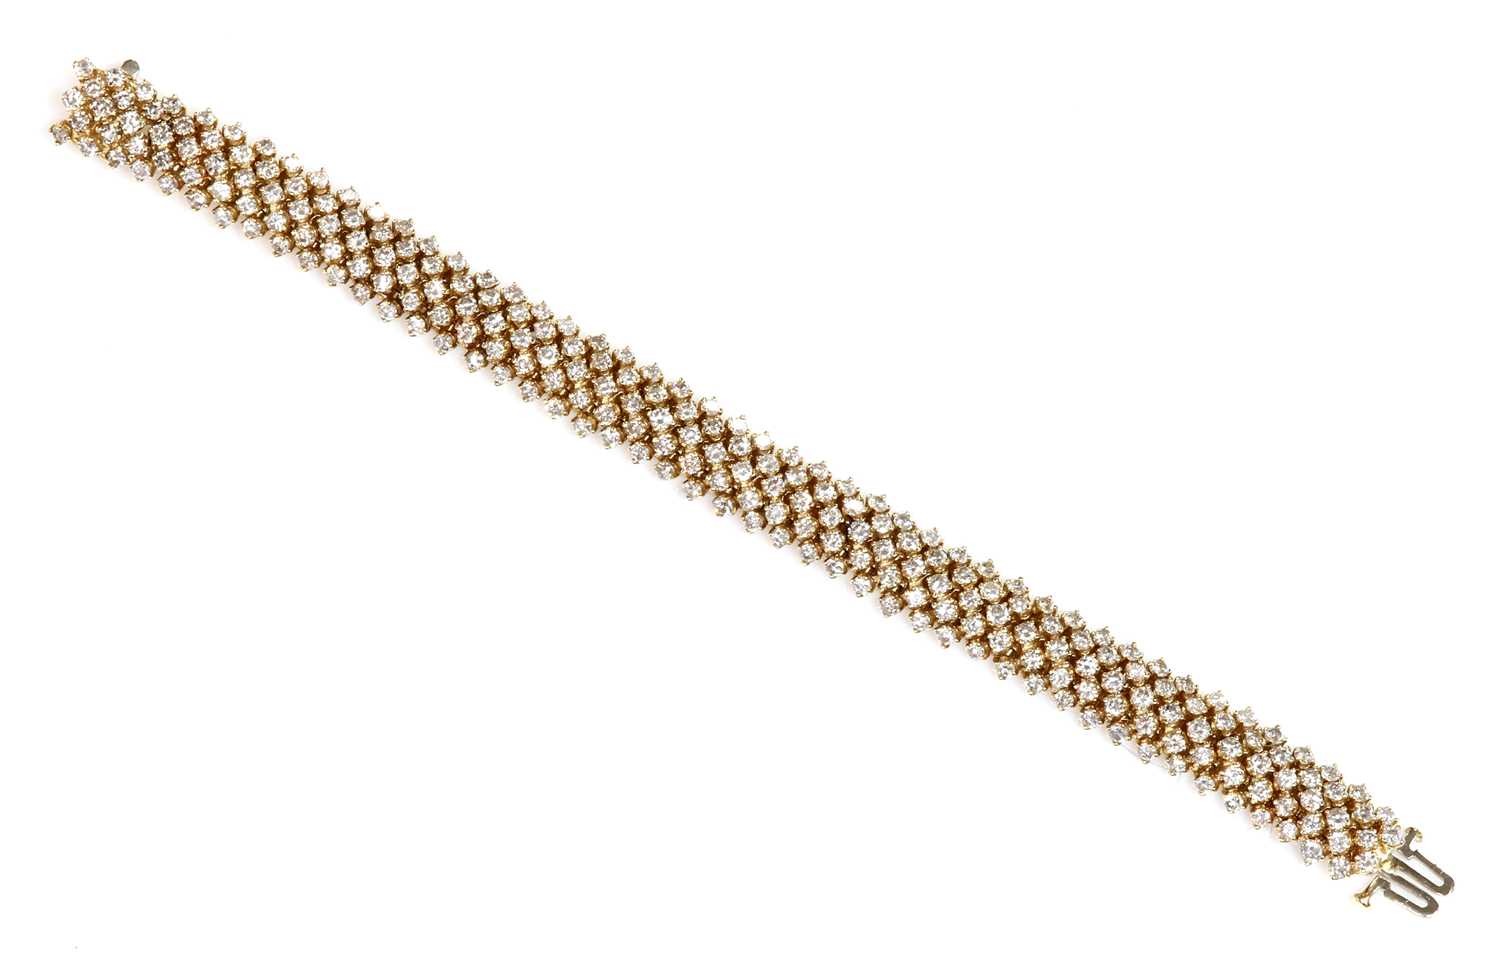 Lot 396 - A Continental three row diamond set bracelet